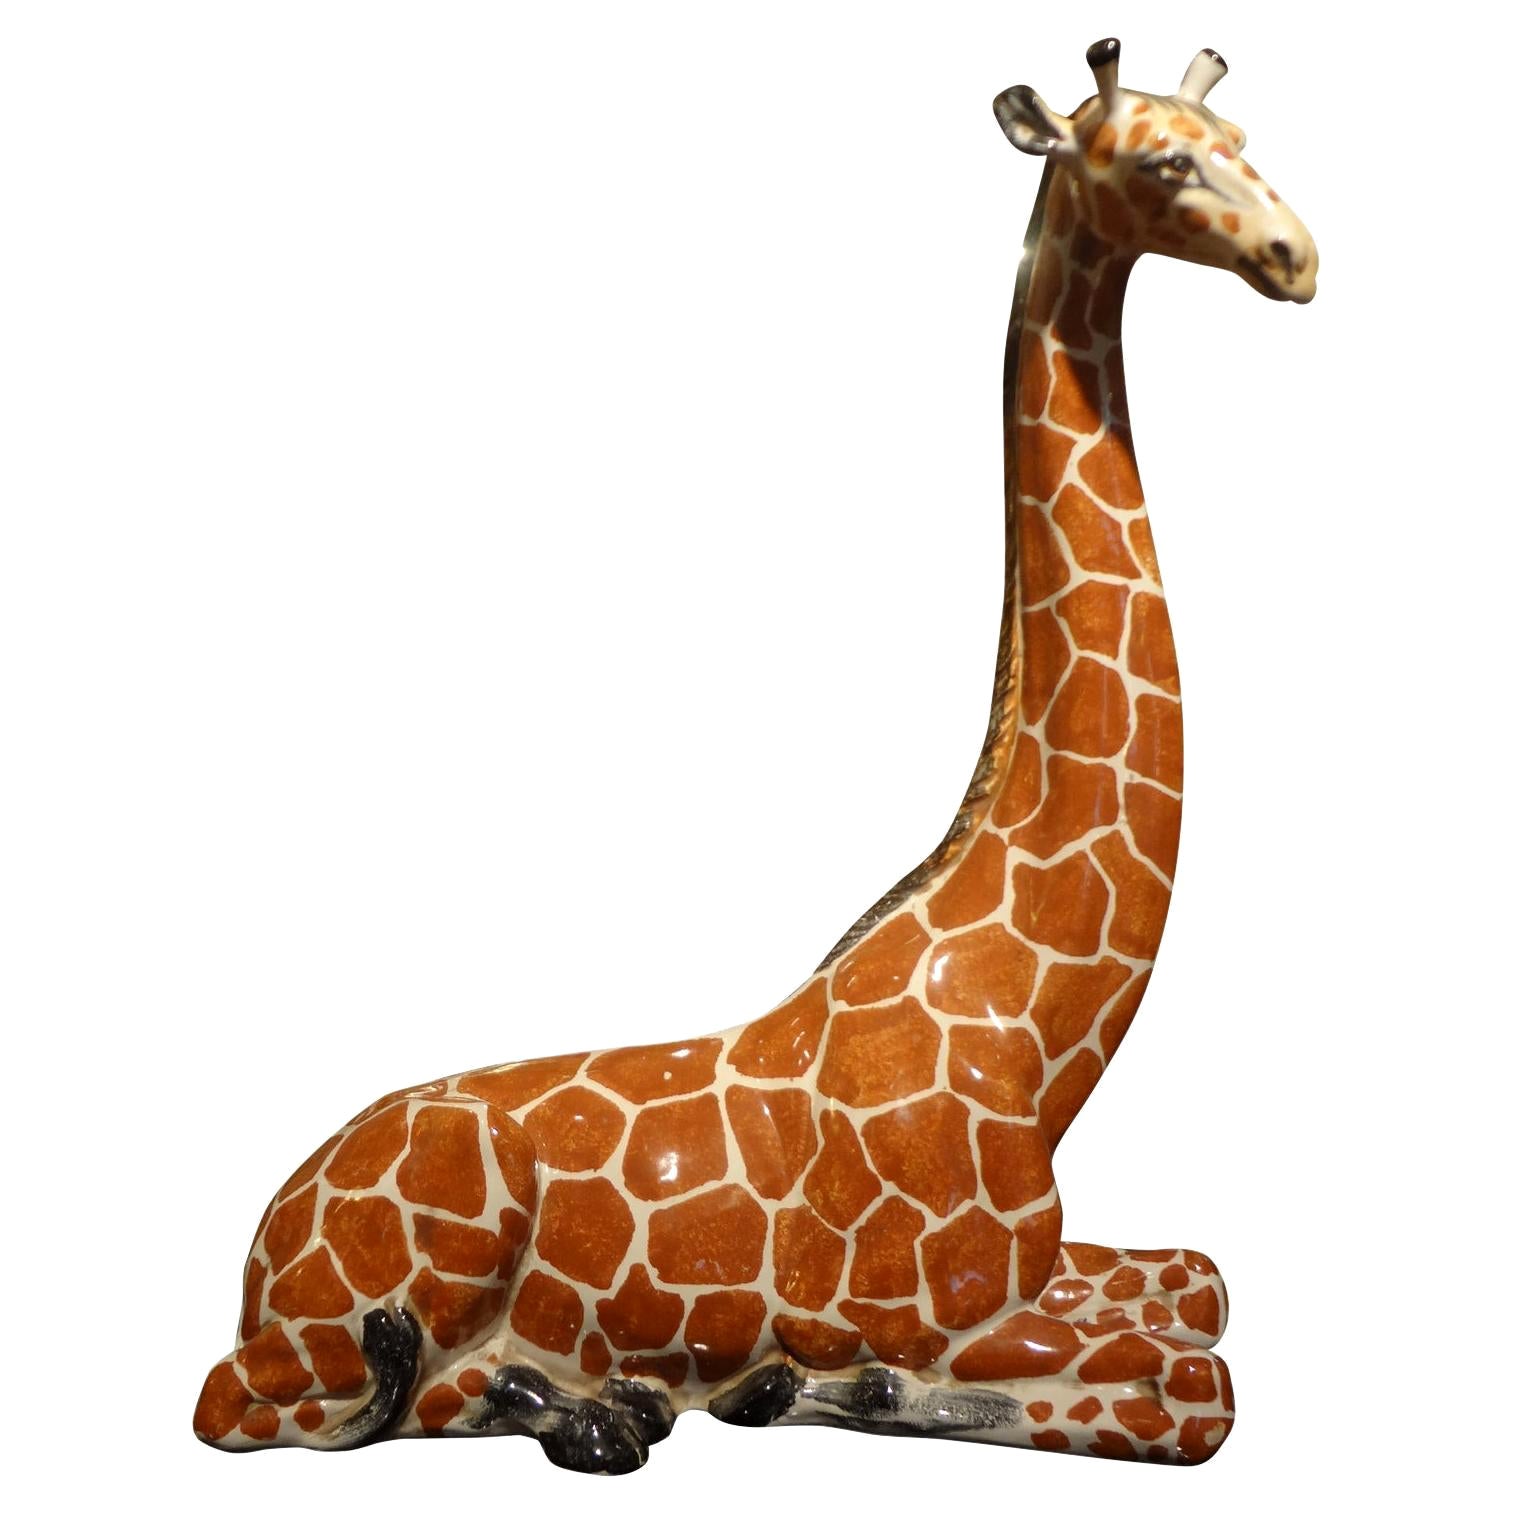 Figure de girafe en terre cuite italienne émaillée